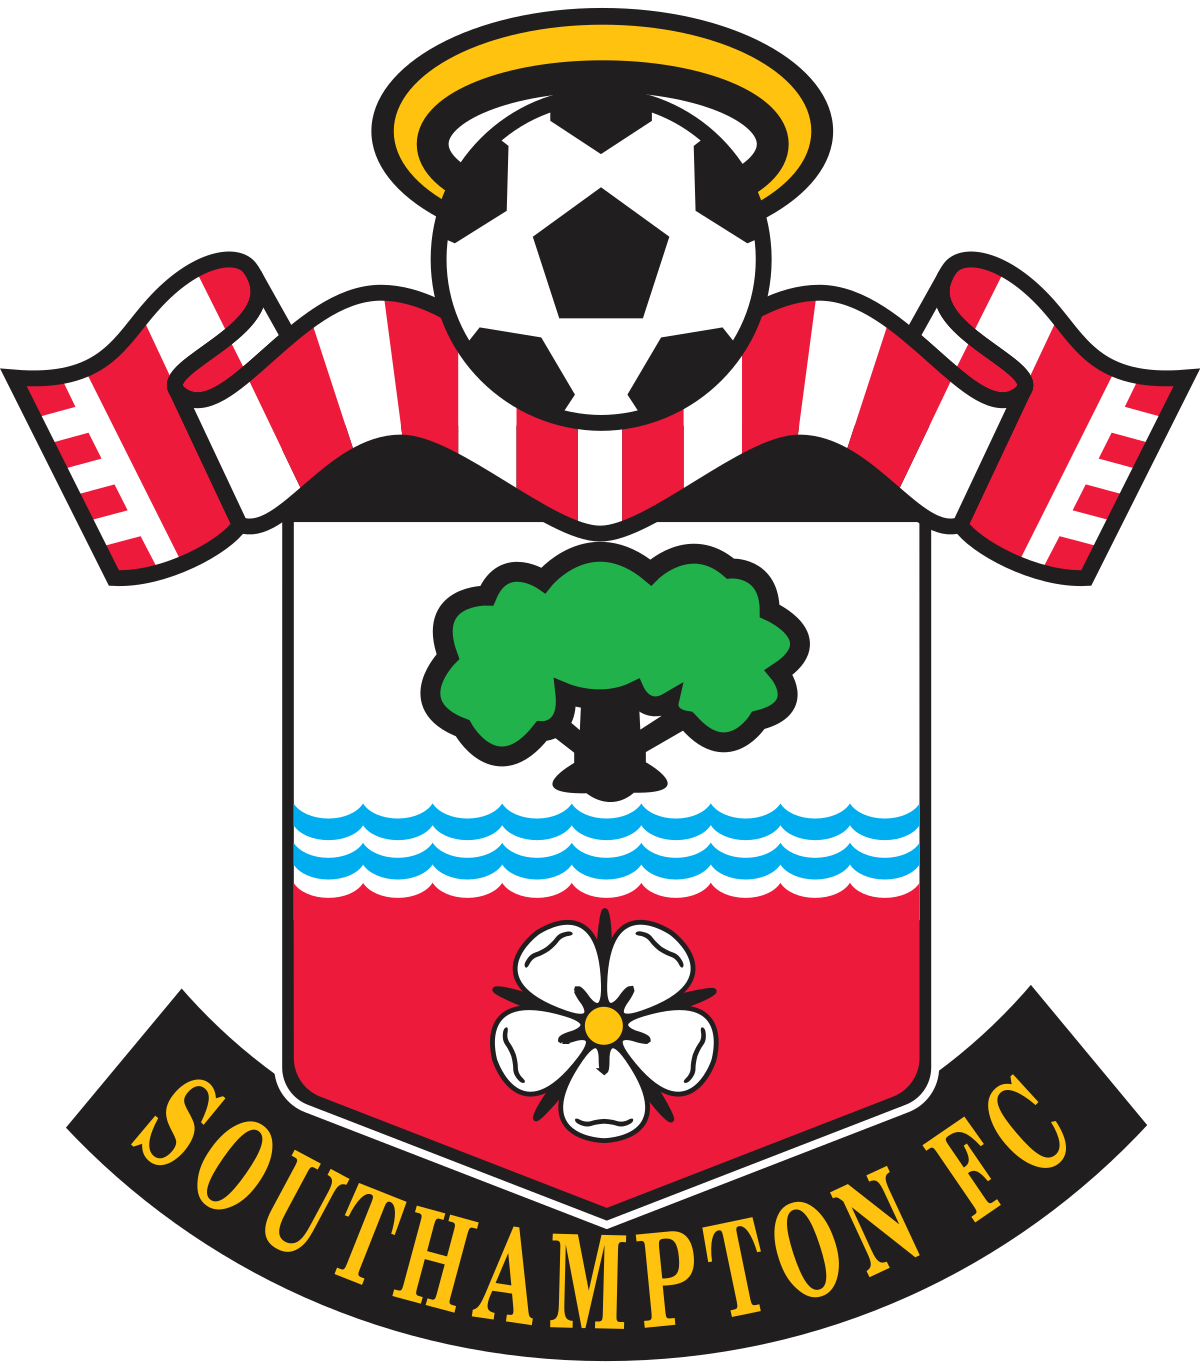 Image result for southampton logo